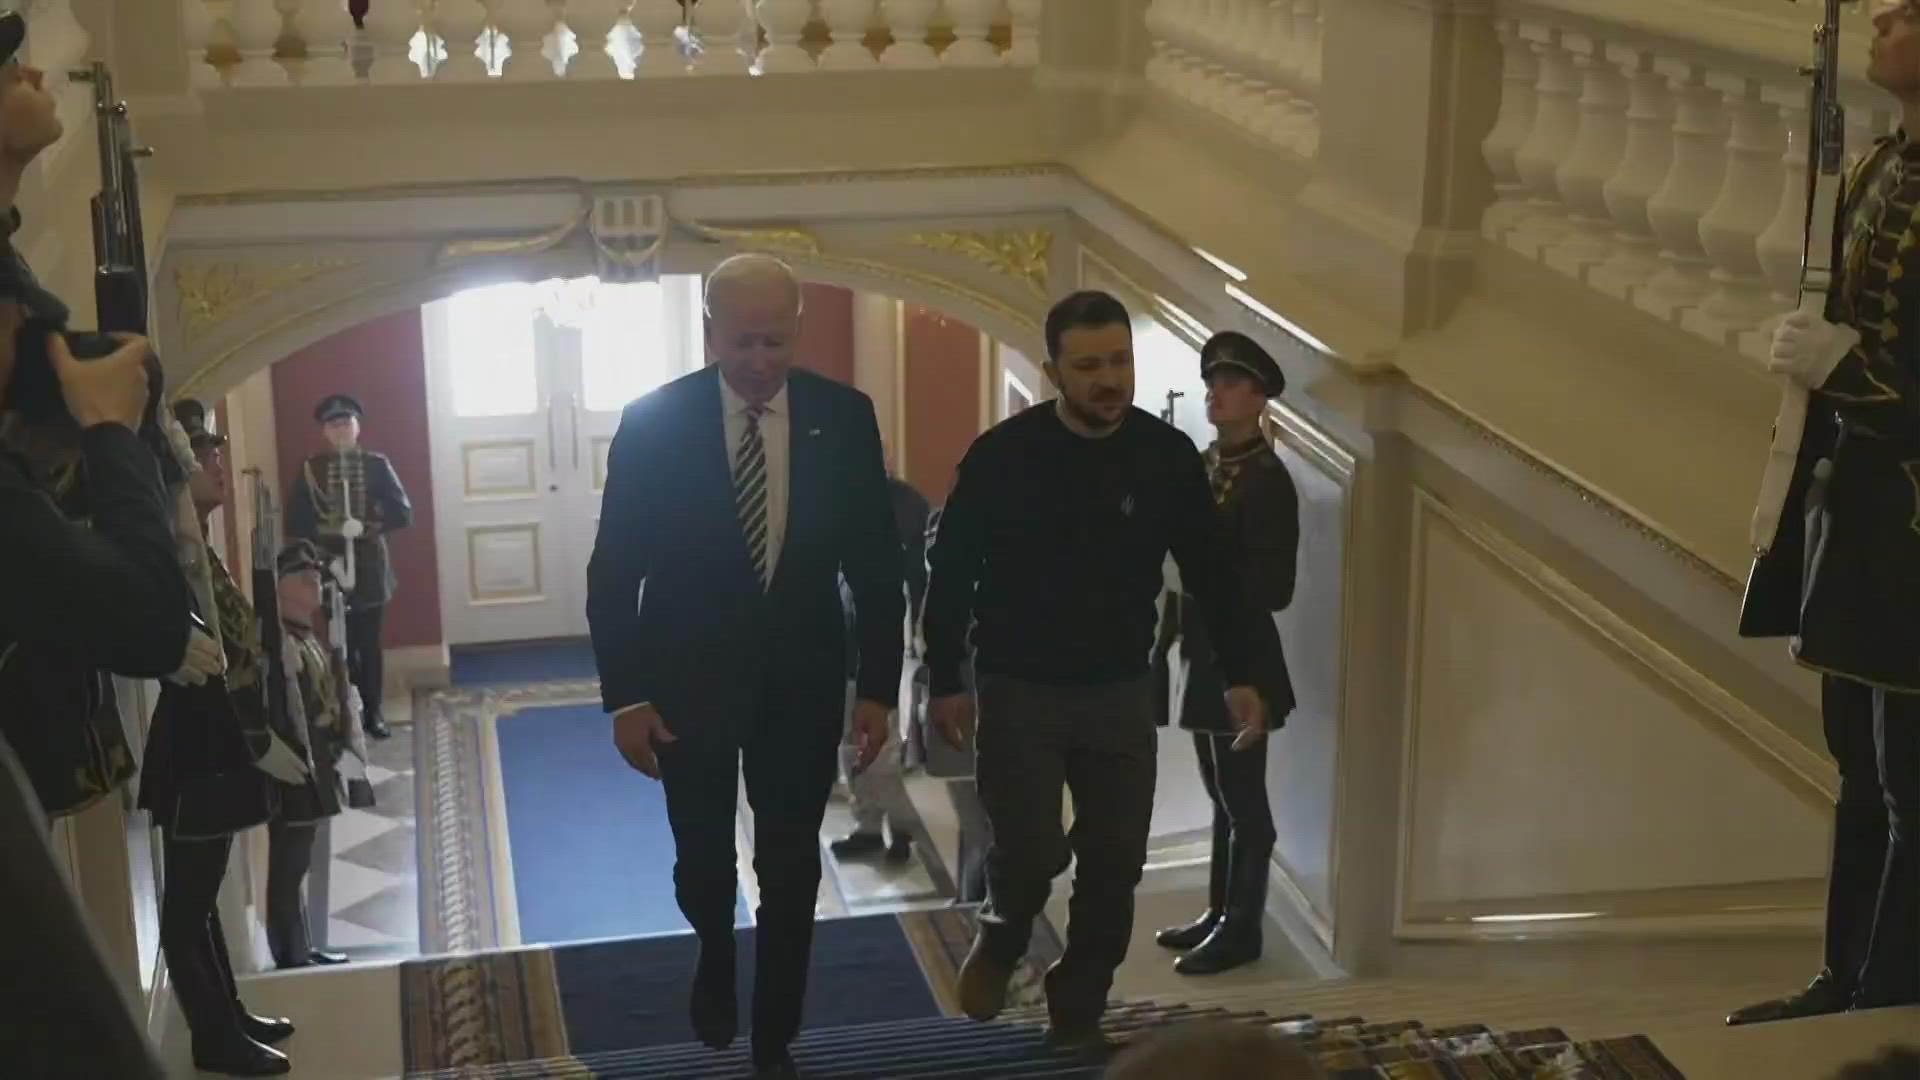 President Joe Biden made an unannounced visit to Ukraine on Monday to meet with President Volodymyr Zelenskyy